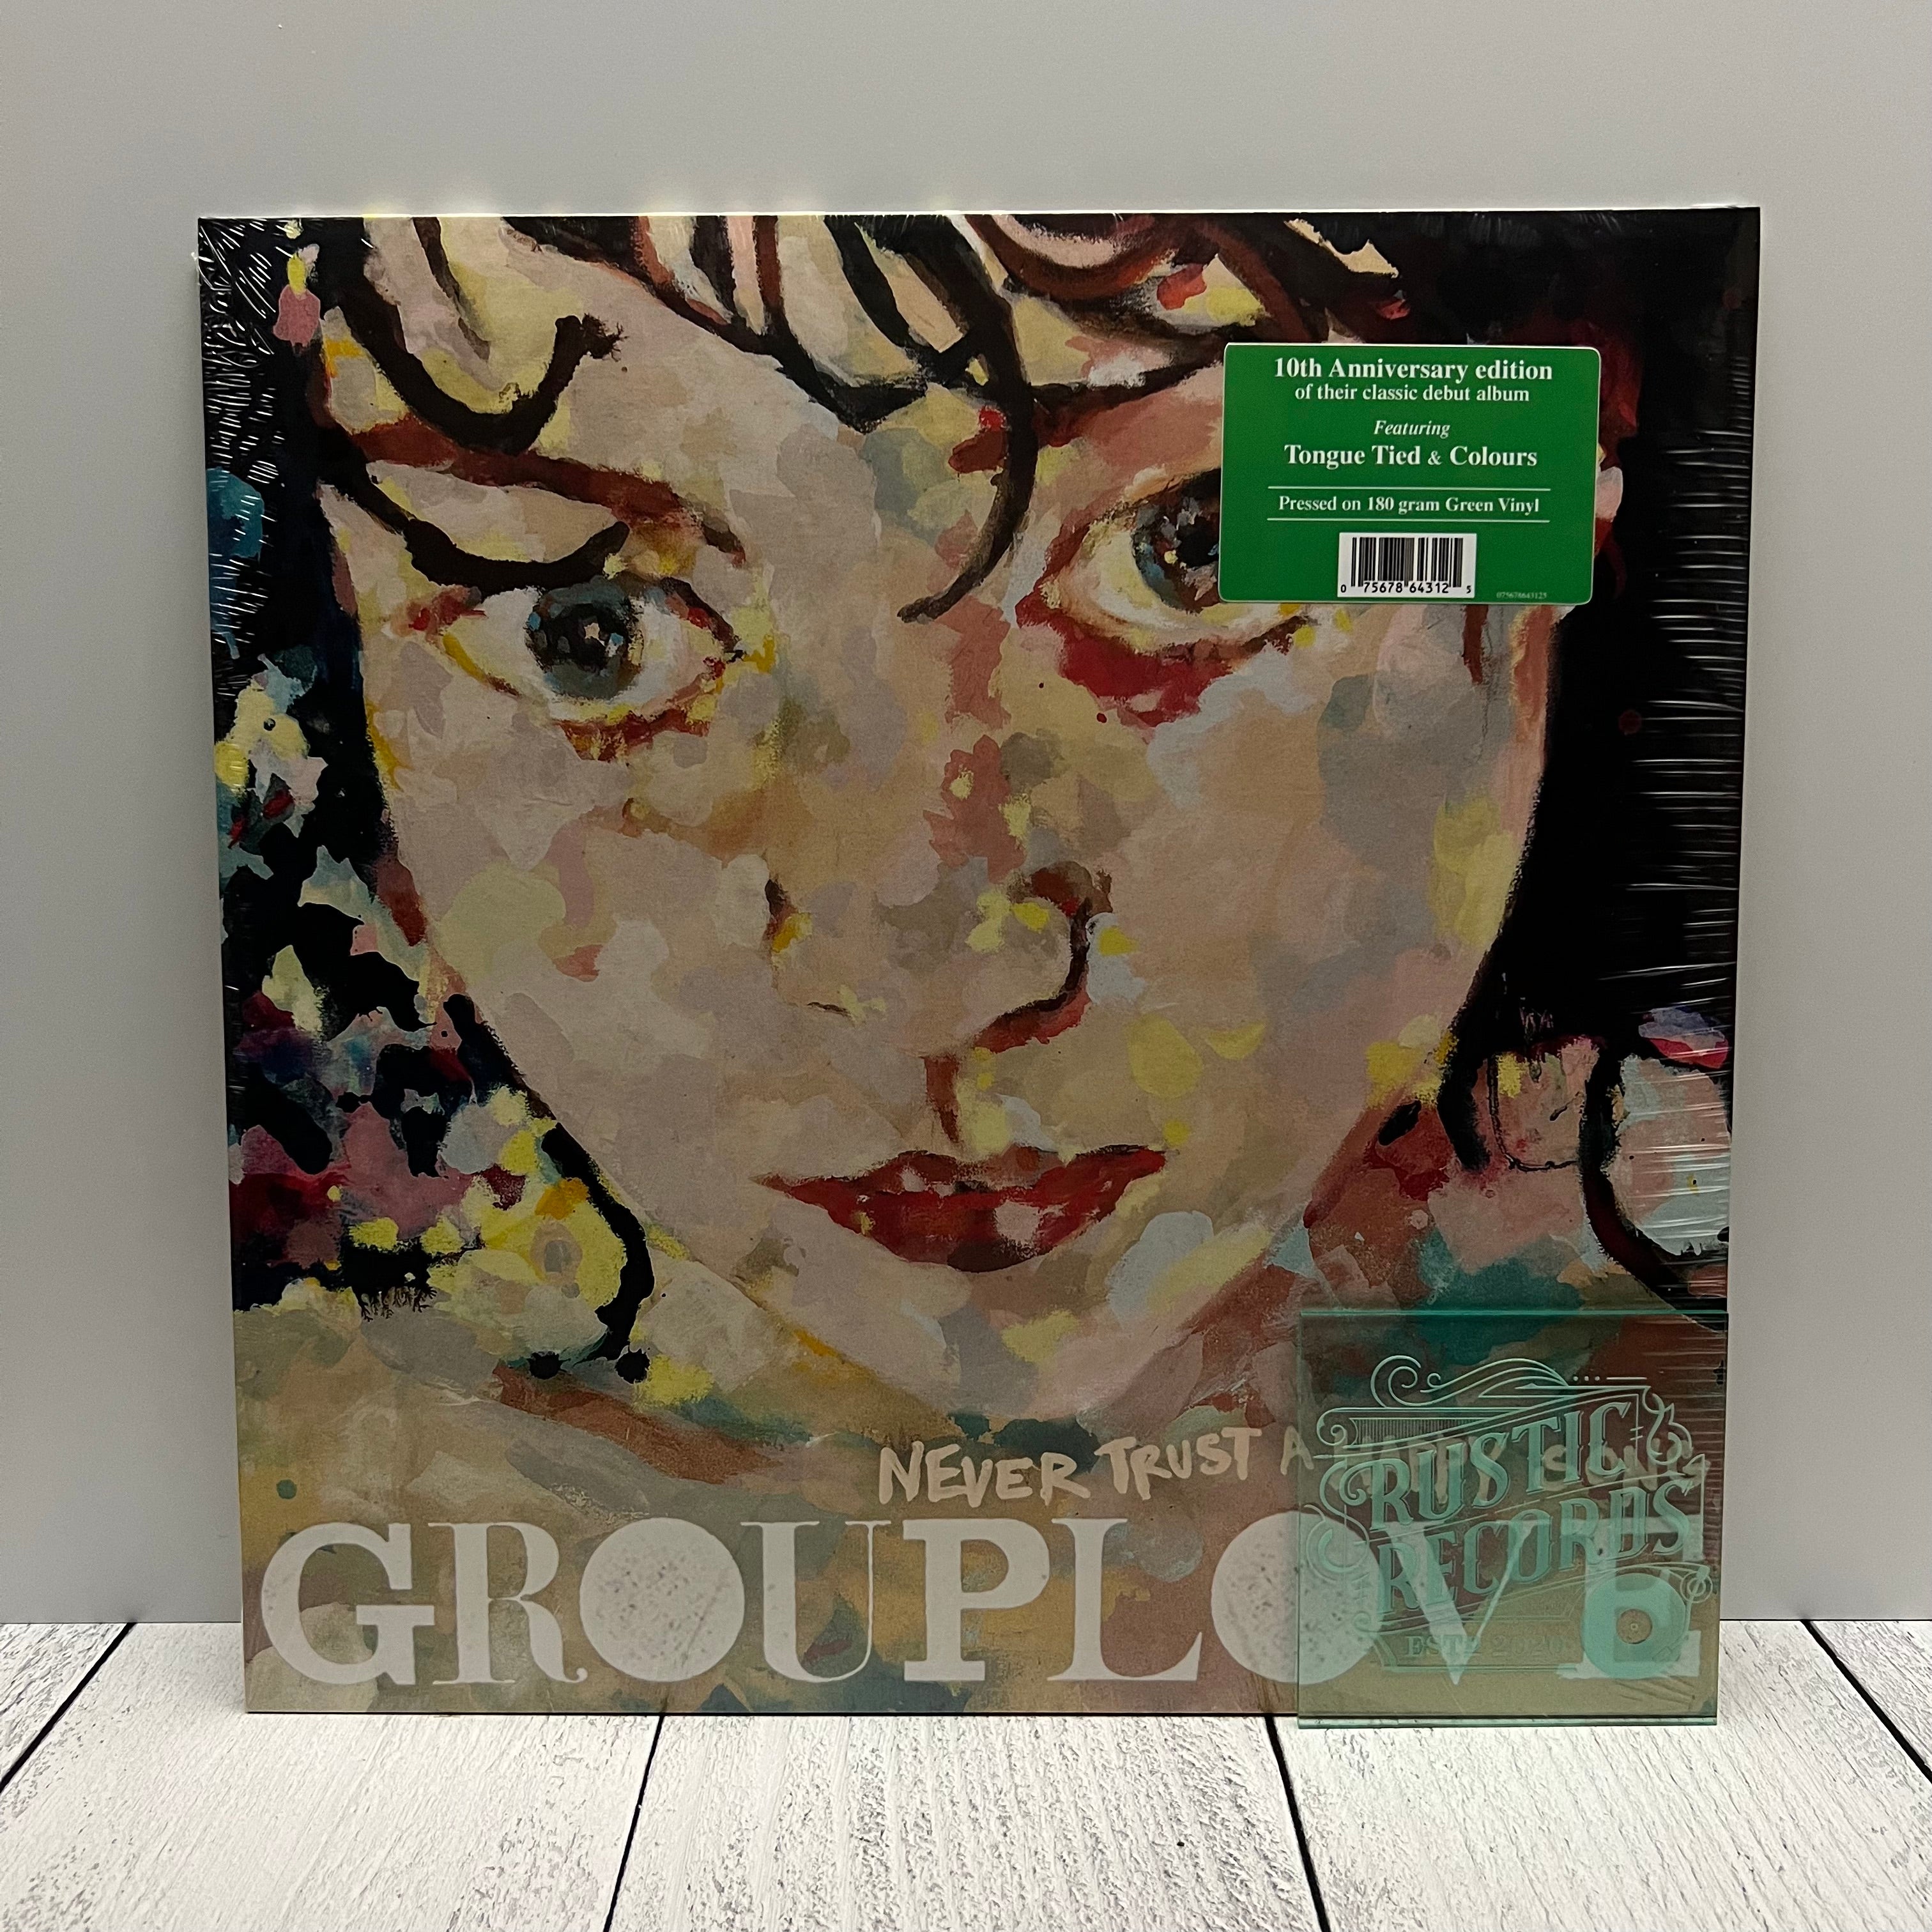 Grouplove - Never Trust A Happy Song (Indie Exclusive Green Vinyl